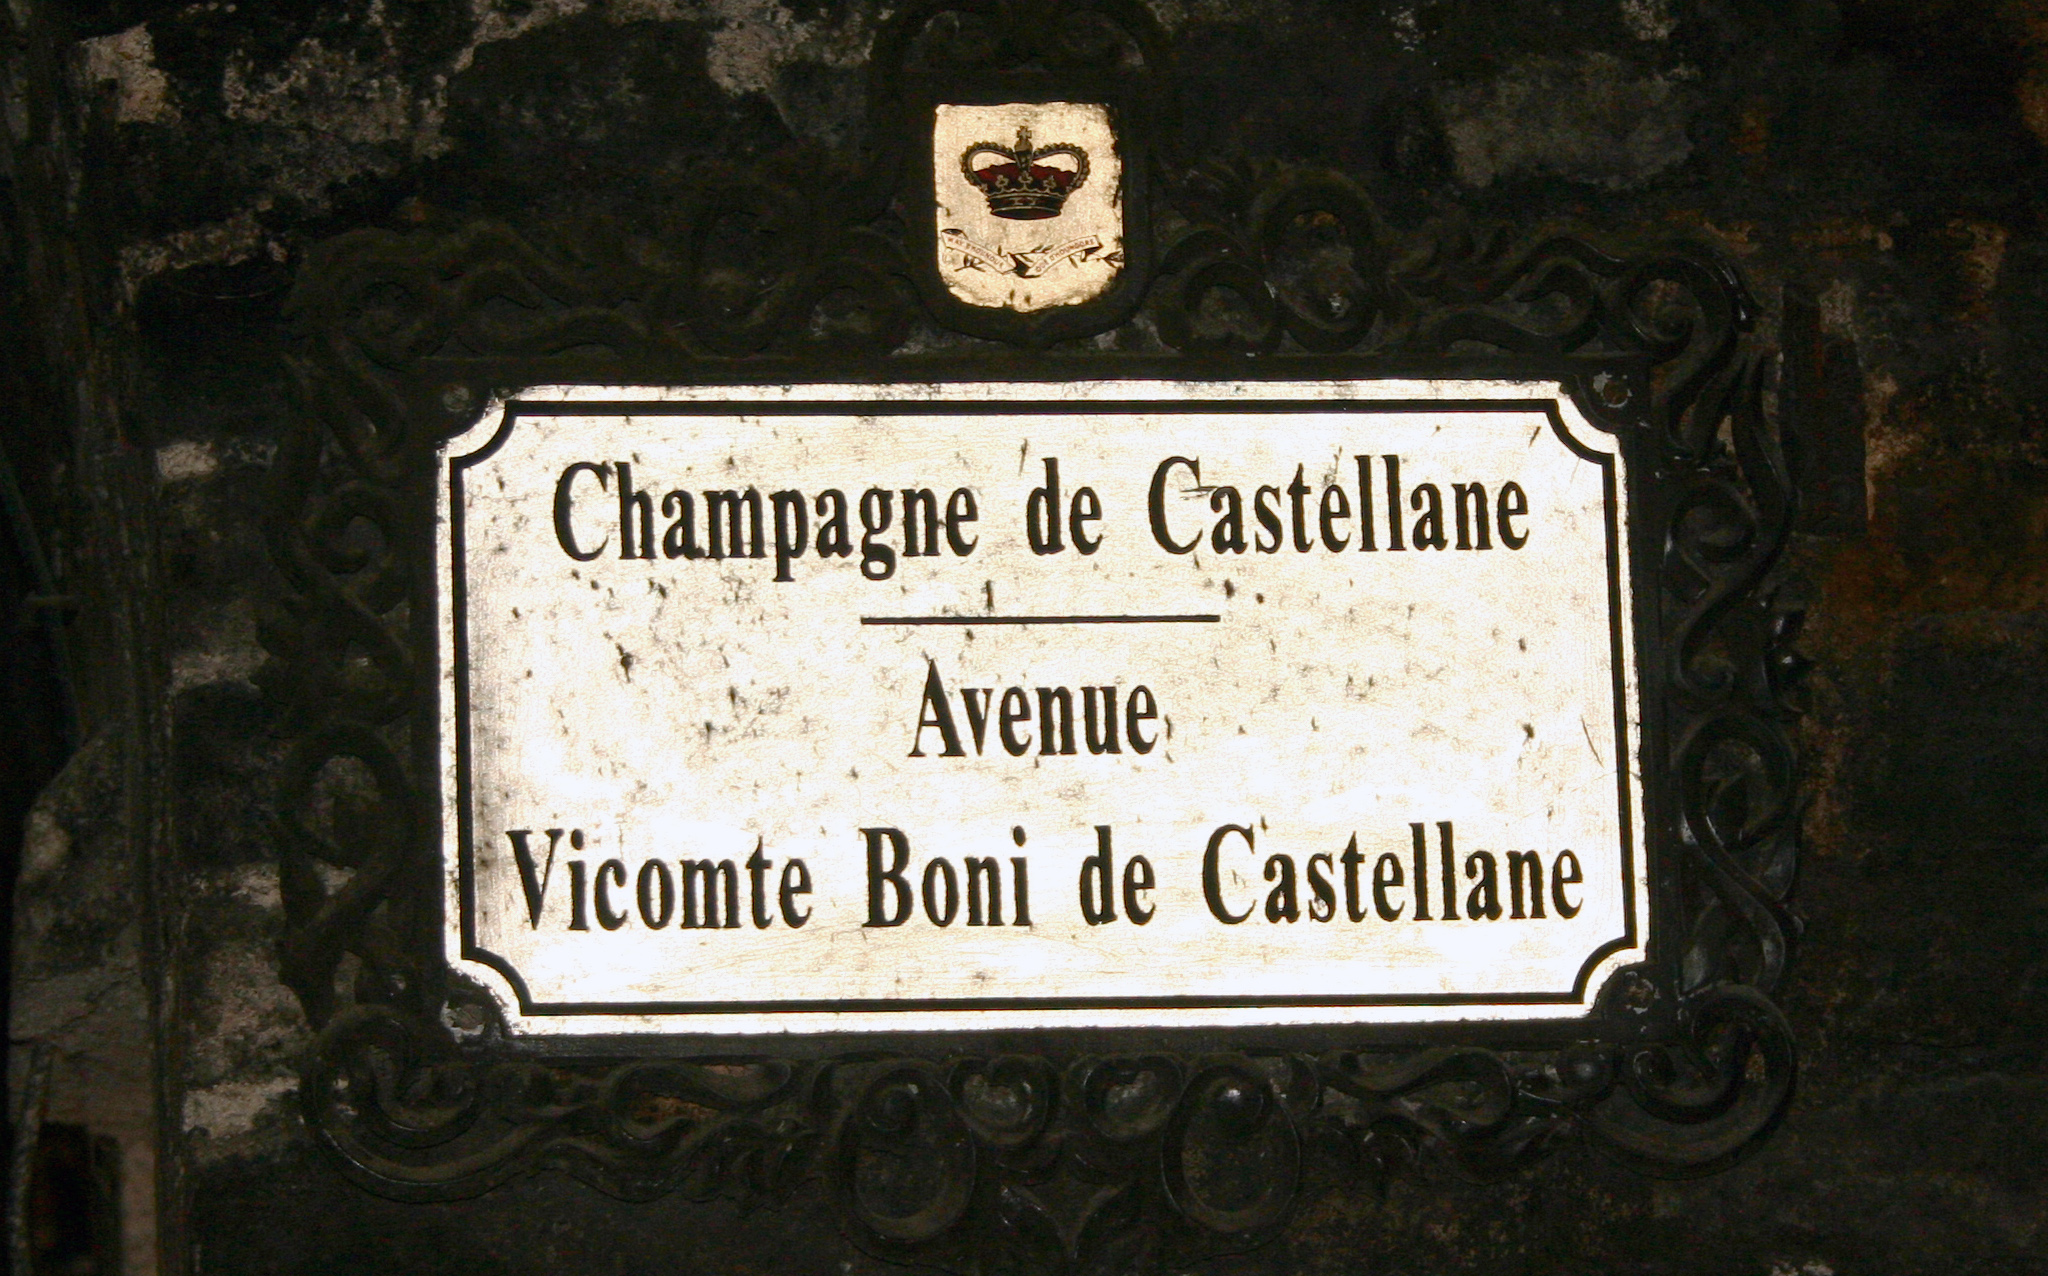 Cellar Signage: Avenue Vicomte Boni de Castellane